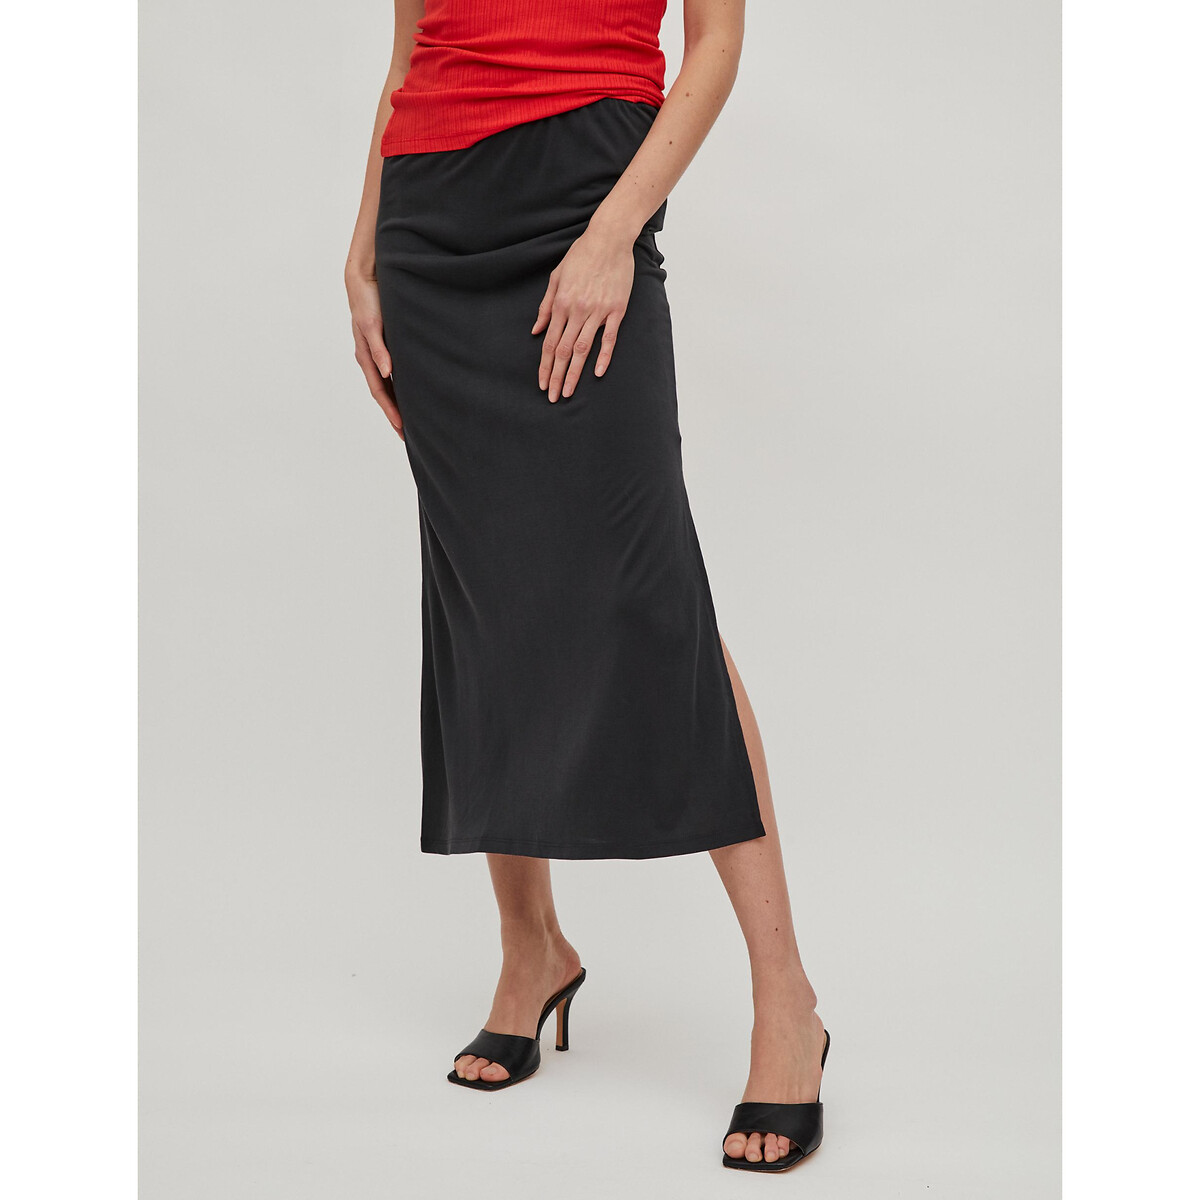 Image of High Waist Midi Skirt